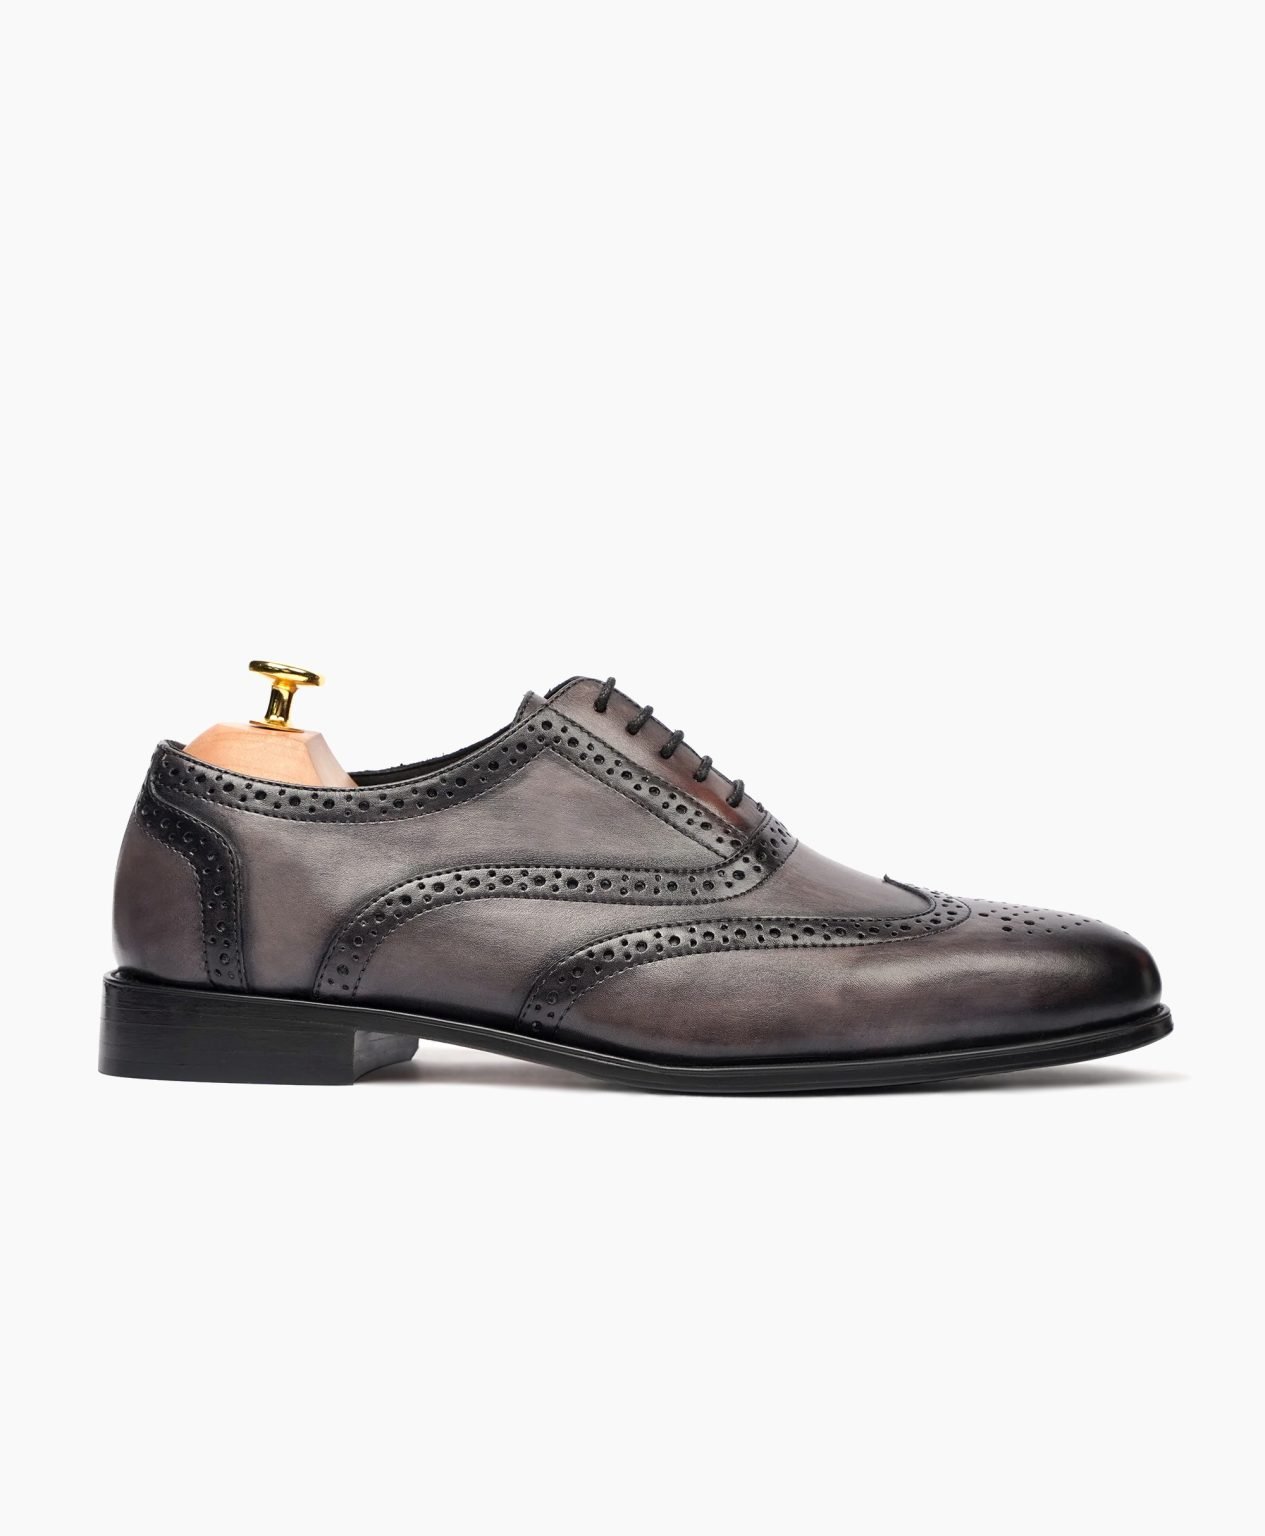 aylesbury-oxford-burnish-gray-leather-shoes-image201